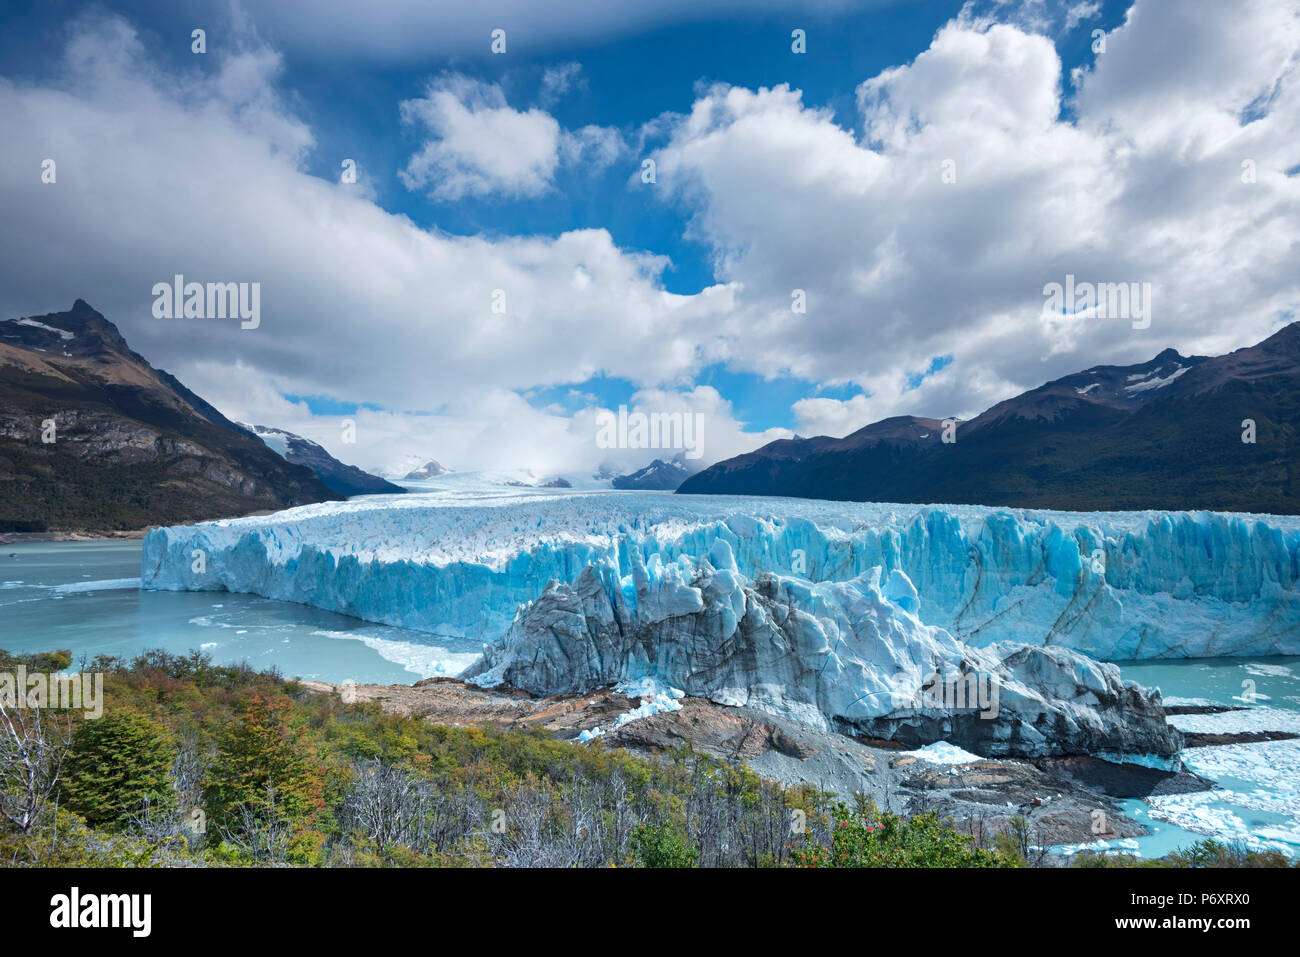 Sud America, Patagonia, Argentina, Santa Cruz, El Calafate, Los Glaciares, Parco Nazionale, ghiacciaio Perito Moreno Foto Stock